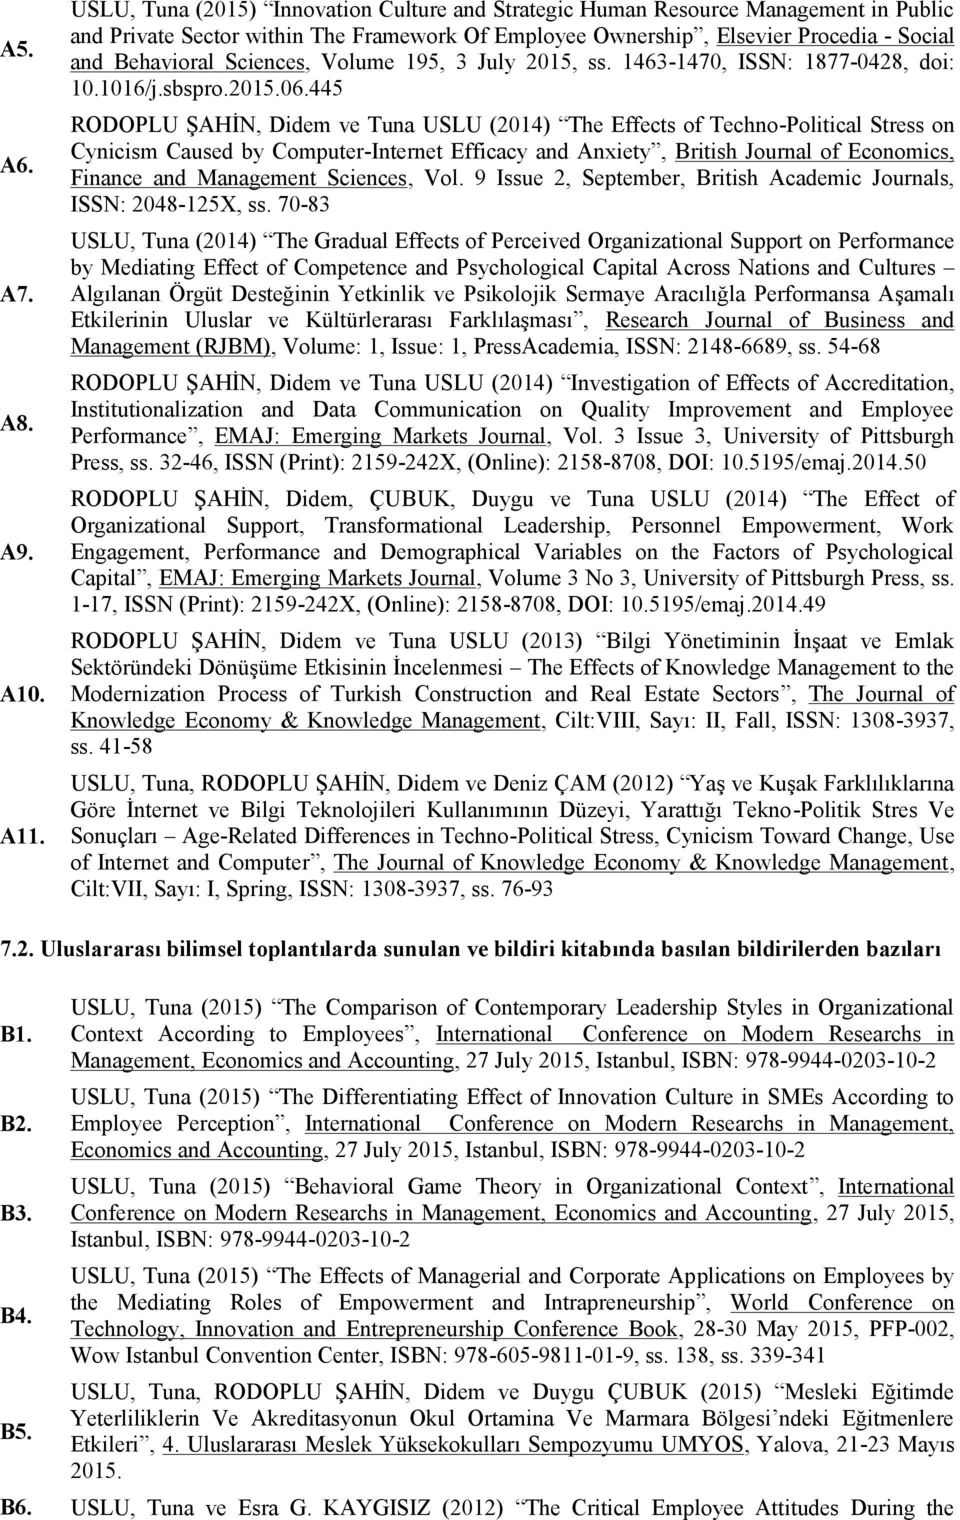 Sciences, Volume 195, 3 July 2015, ss. 1463-1470, ISSN: 1877-0428, doi: 10.1016/j.sbspro.2015.06.